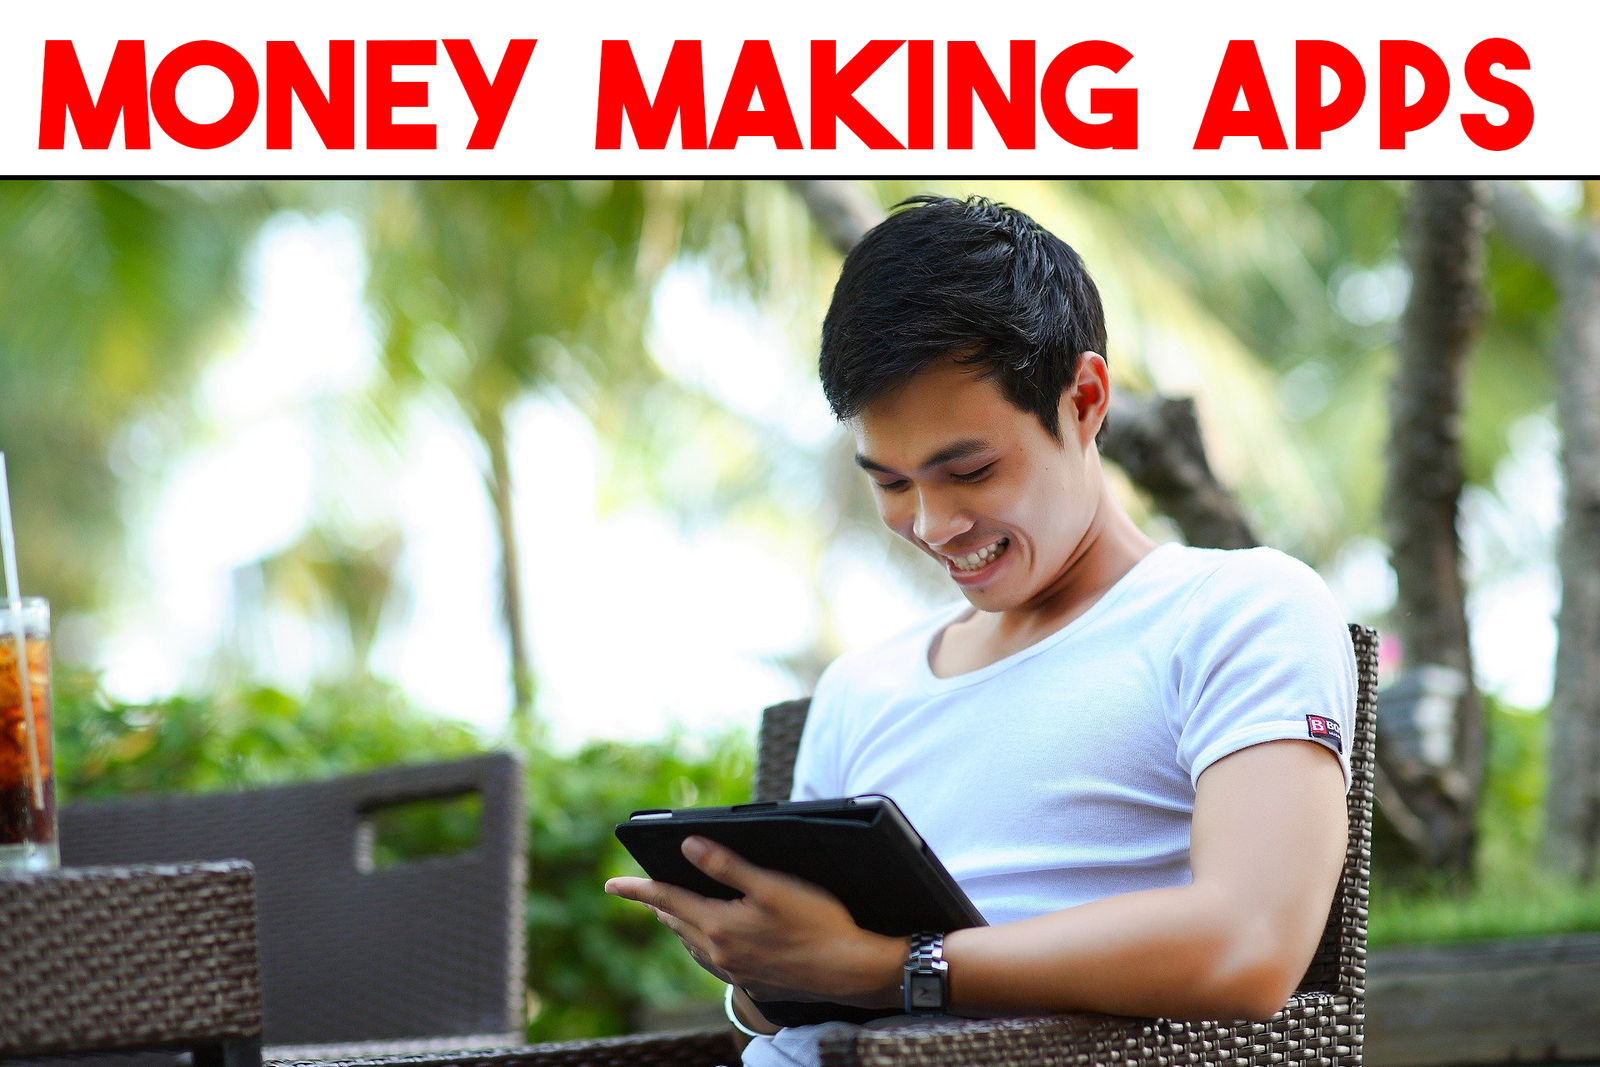 Top 5 Money Making Apps